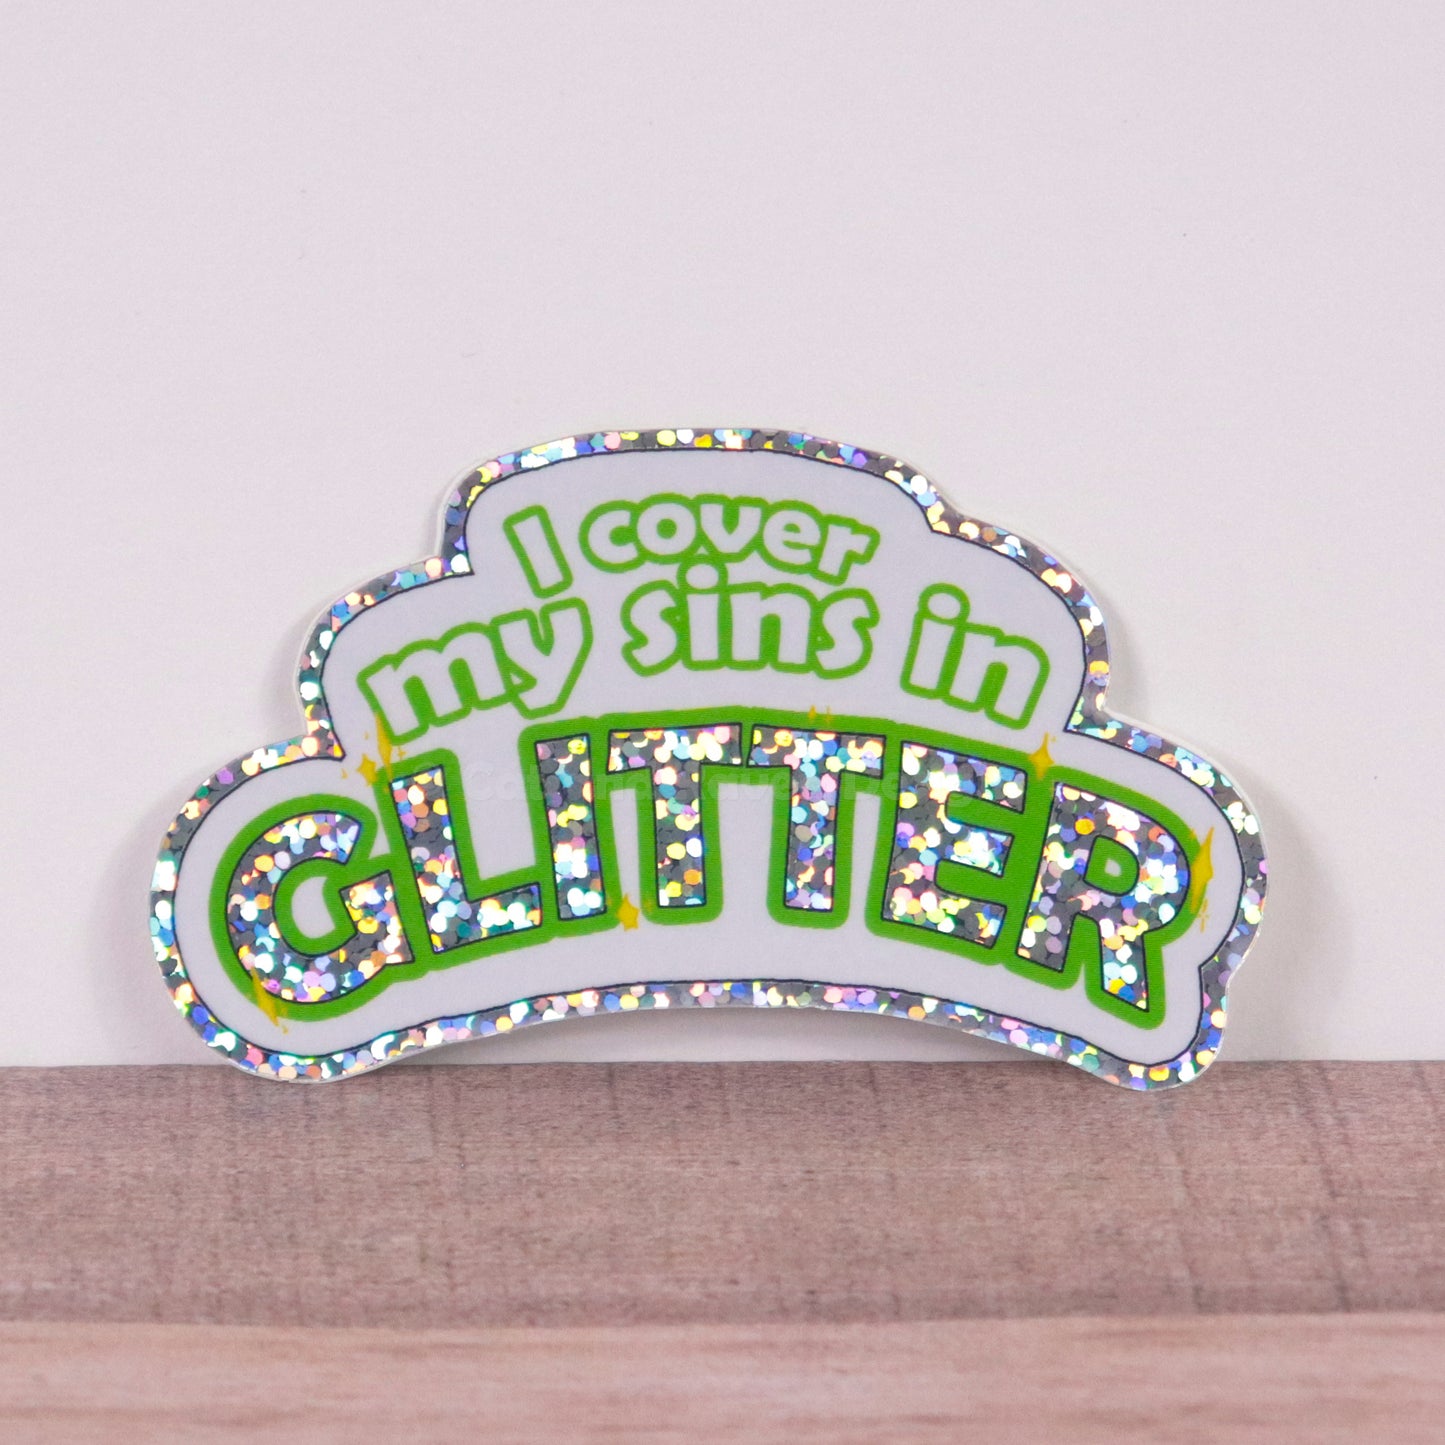 I Cover My Sins in Glitter vinyl sticker